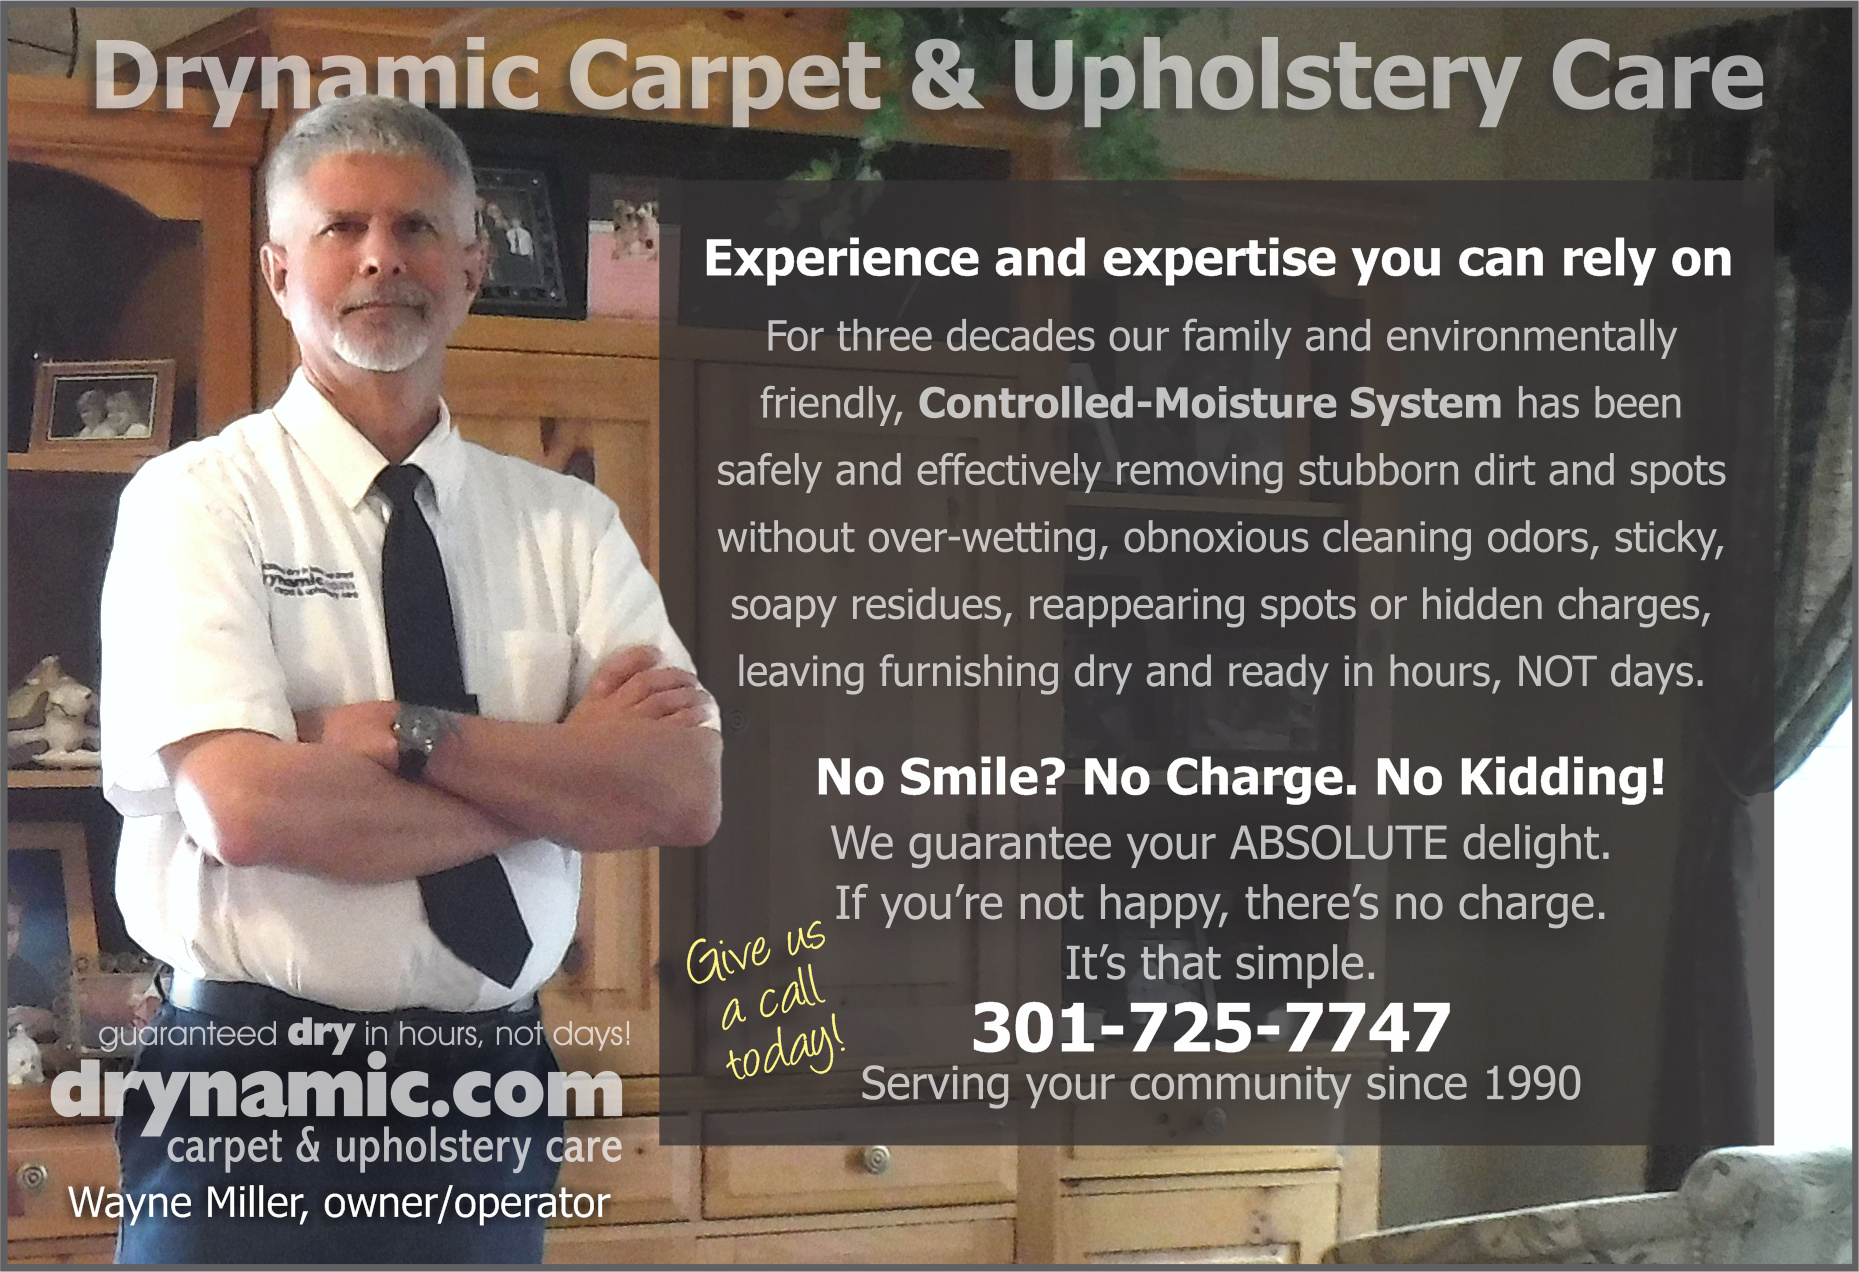 Drynamic Carpet & Upholstery Care